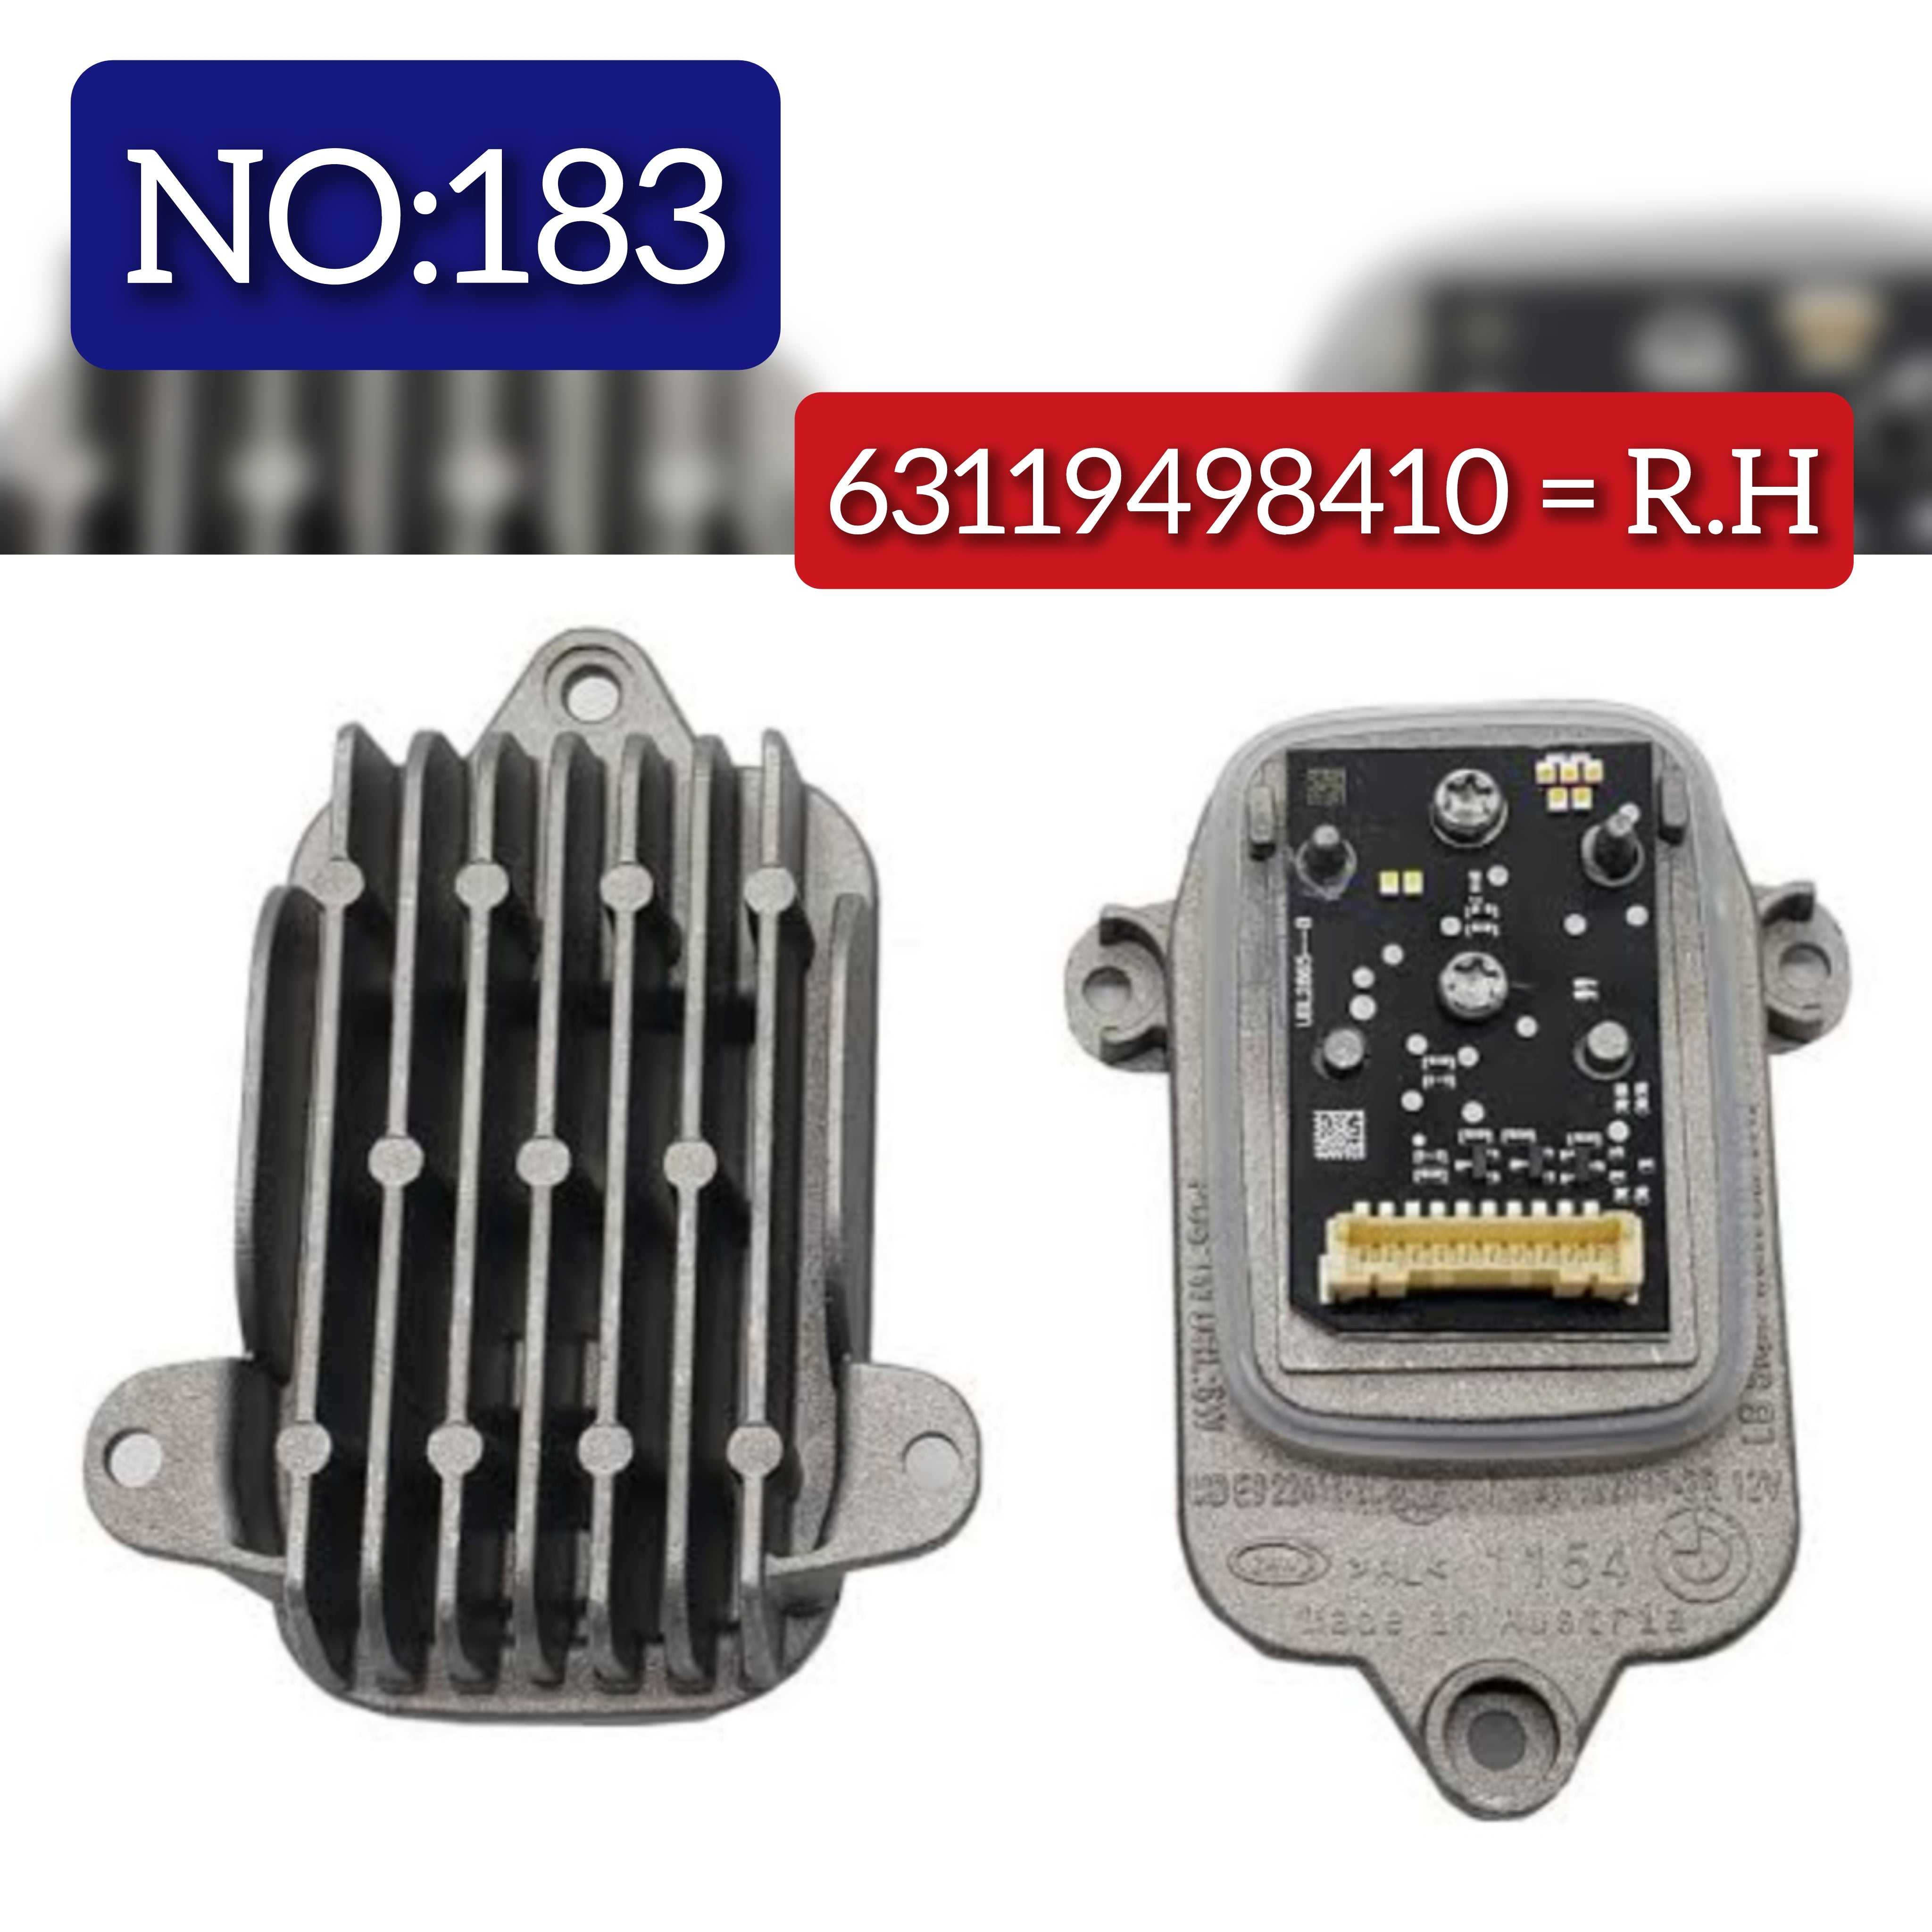 Right LED Headlight Turn Signal Light Module 63119498410 For BMW 7' G11 G12 Tag-BL-183